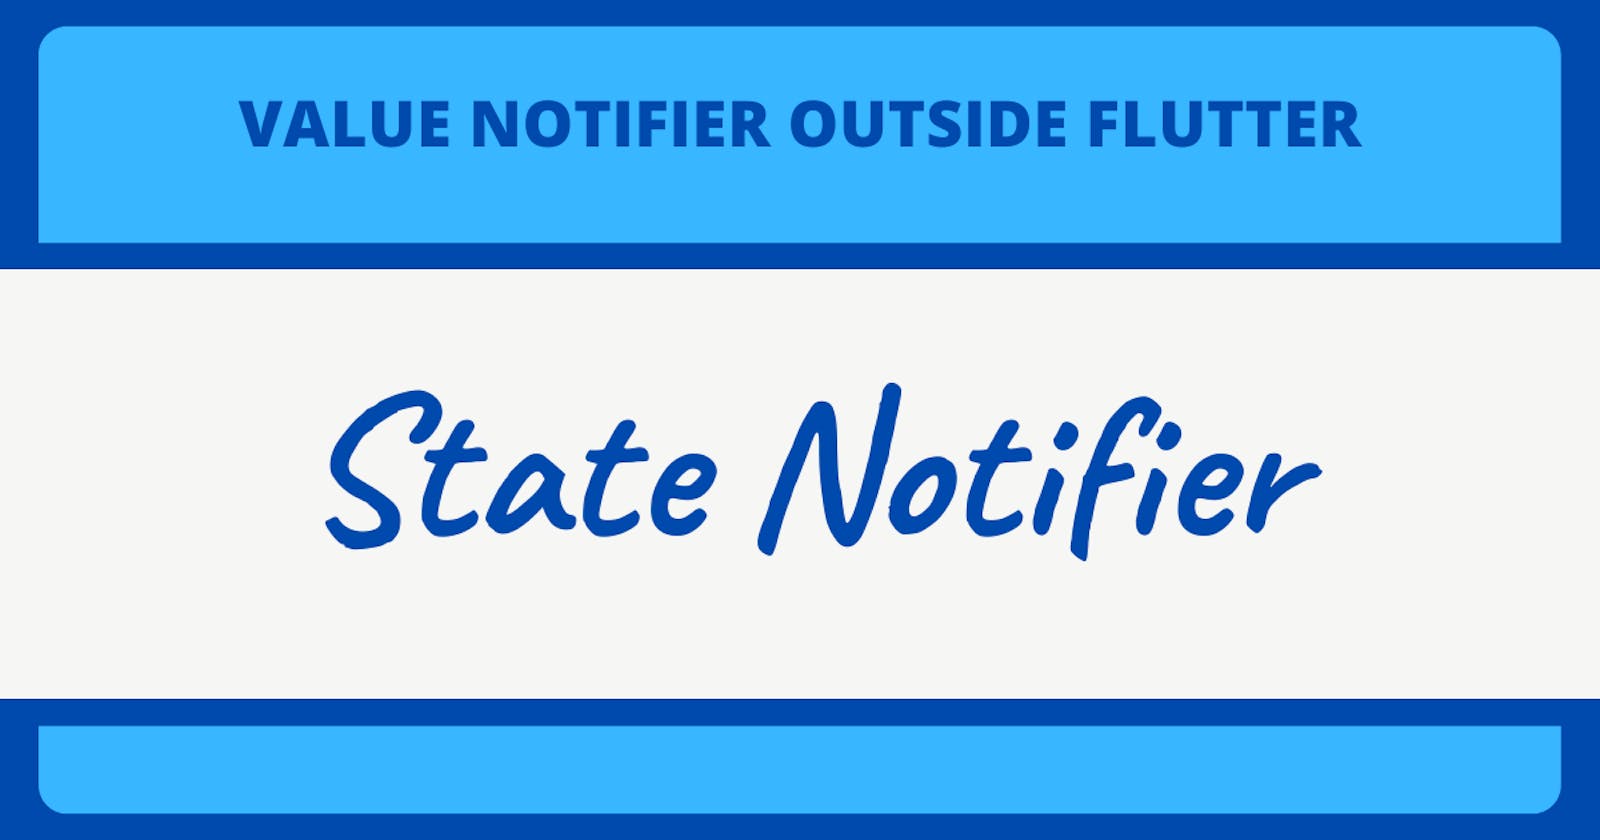 StateNotifier, ValueNotifier outside Flutter